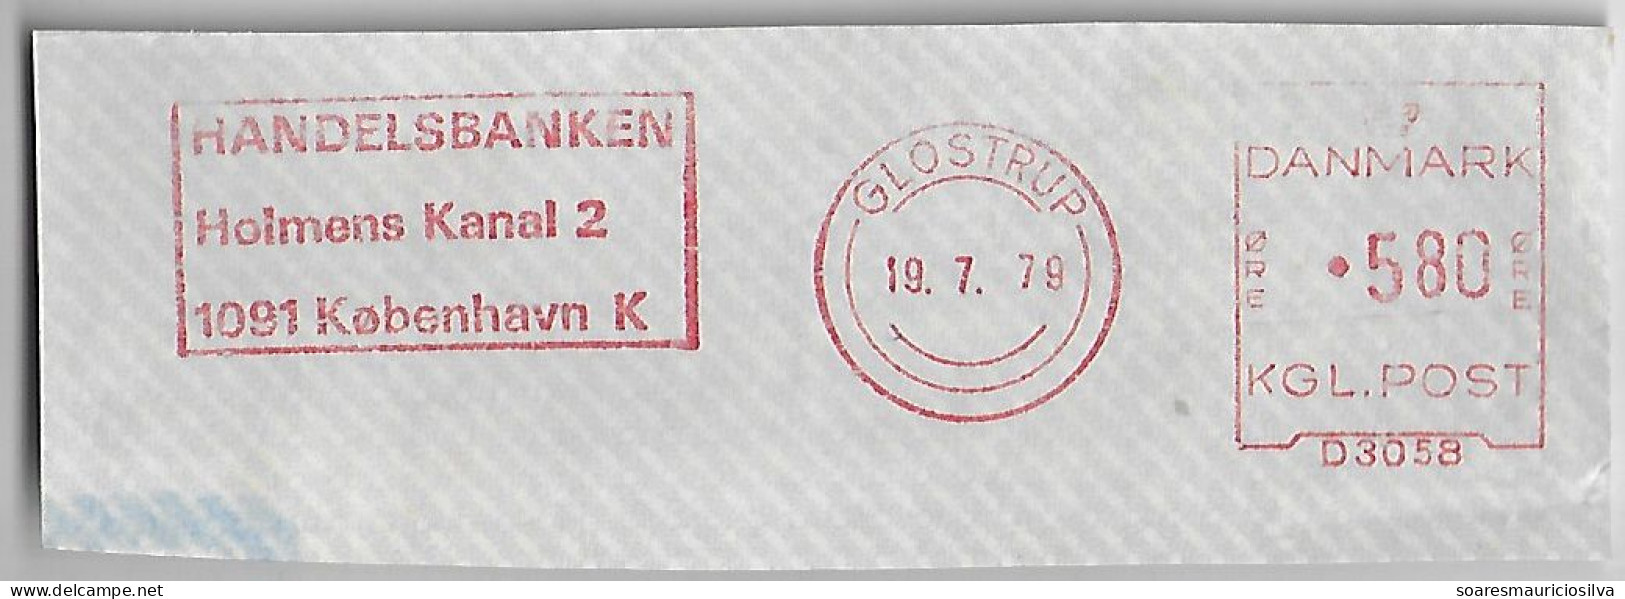 Denmark 1979 Fragment Cover Meter Stamp Francotyp Slogan Handelsbanken From Glostrup - Cartas & Documentos